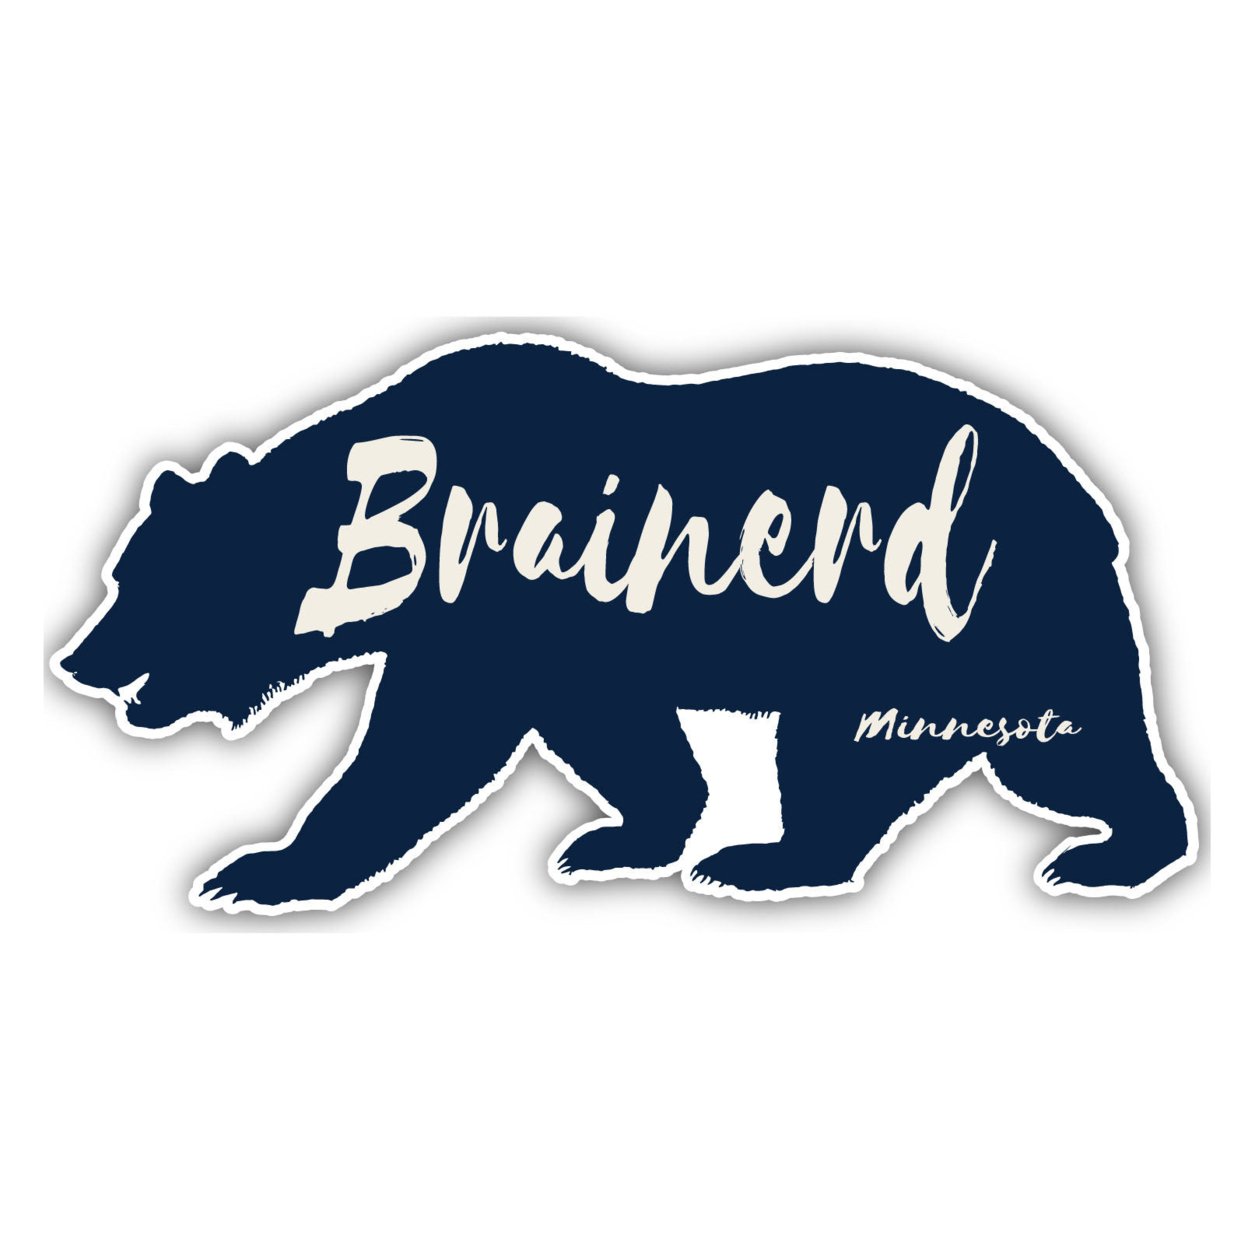 Brainerd Minnesota Souvenir Decorative Stickers (Choose Theme And Size) - Single Unit, 4-Inch, Camp Life